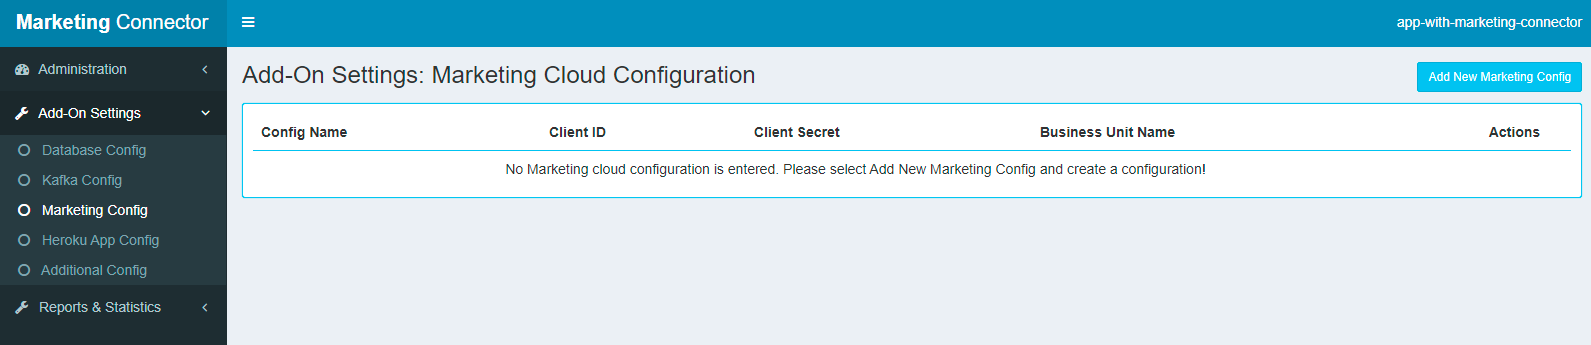 A screenshot when no Marketing Cloud configuration is created.